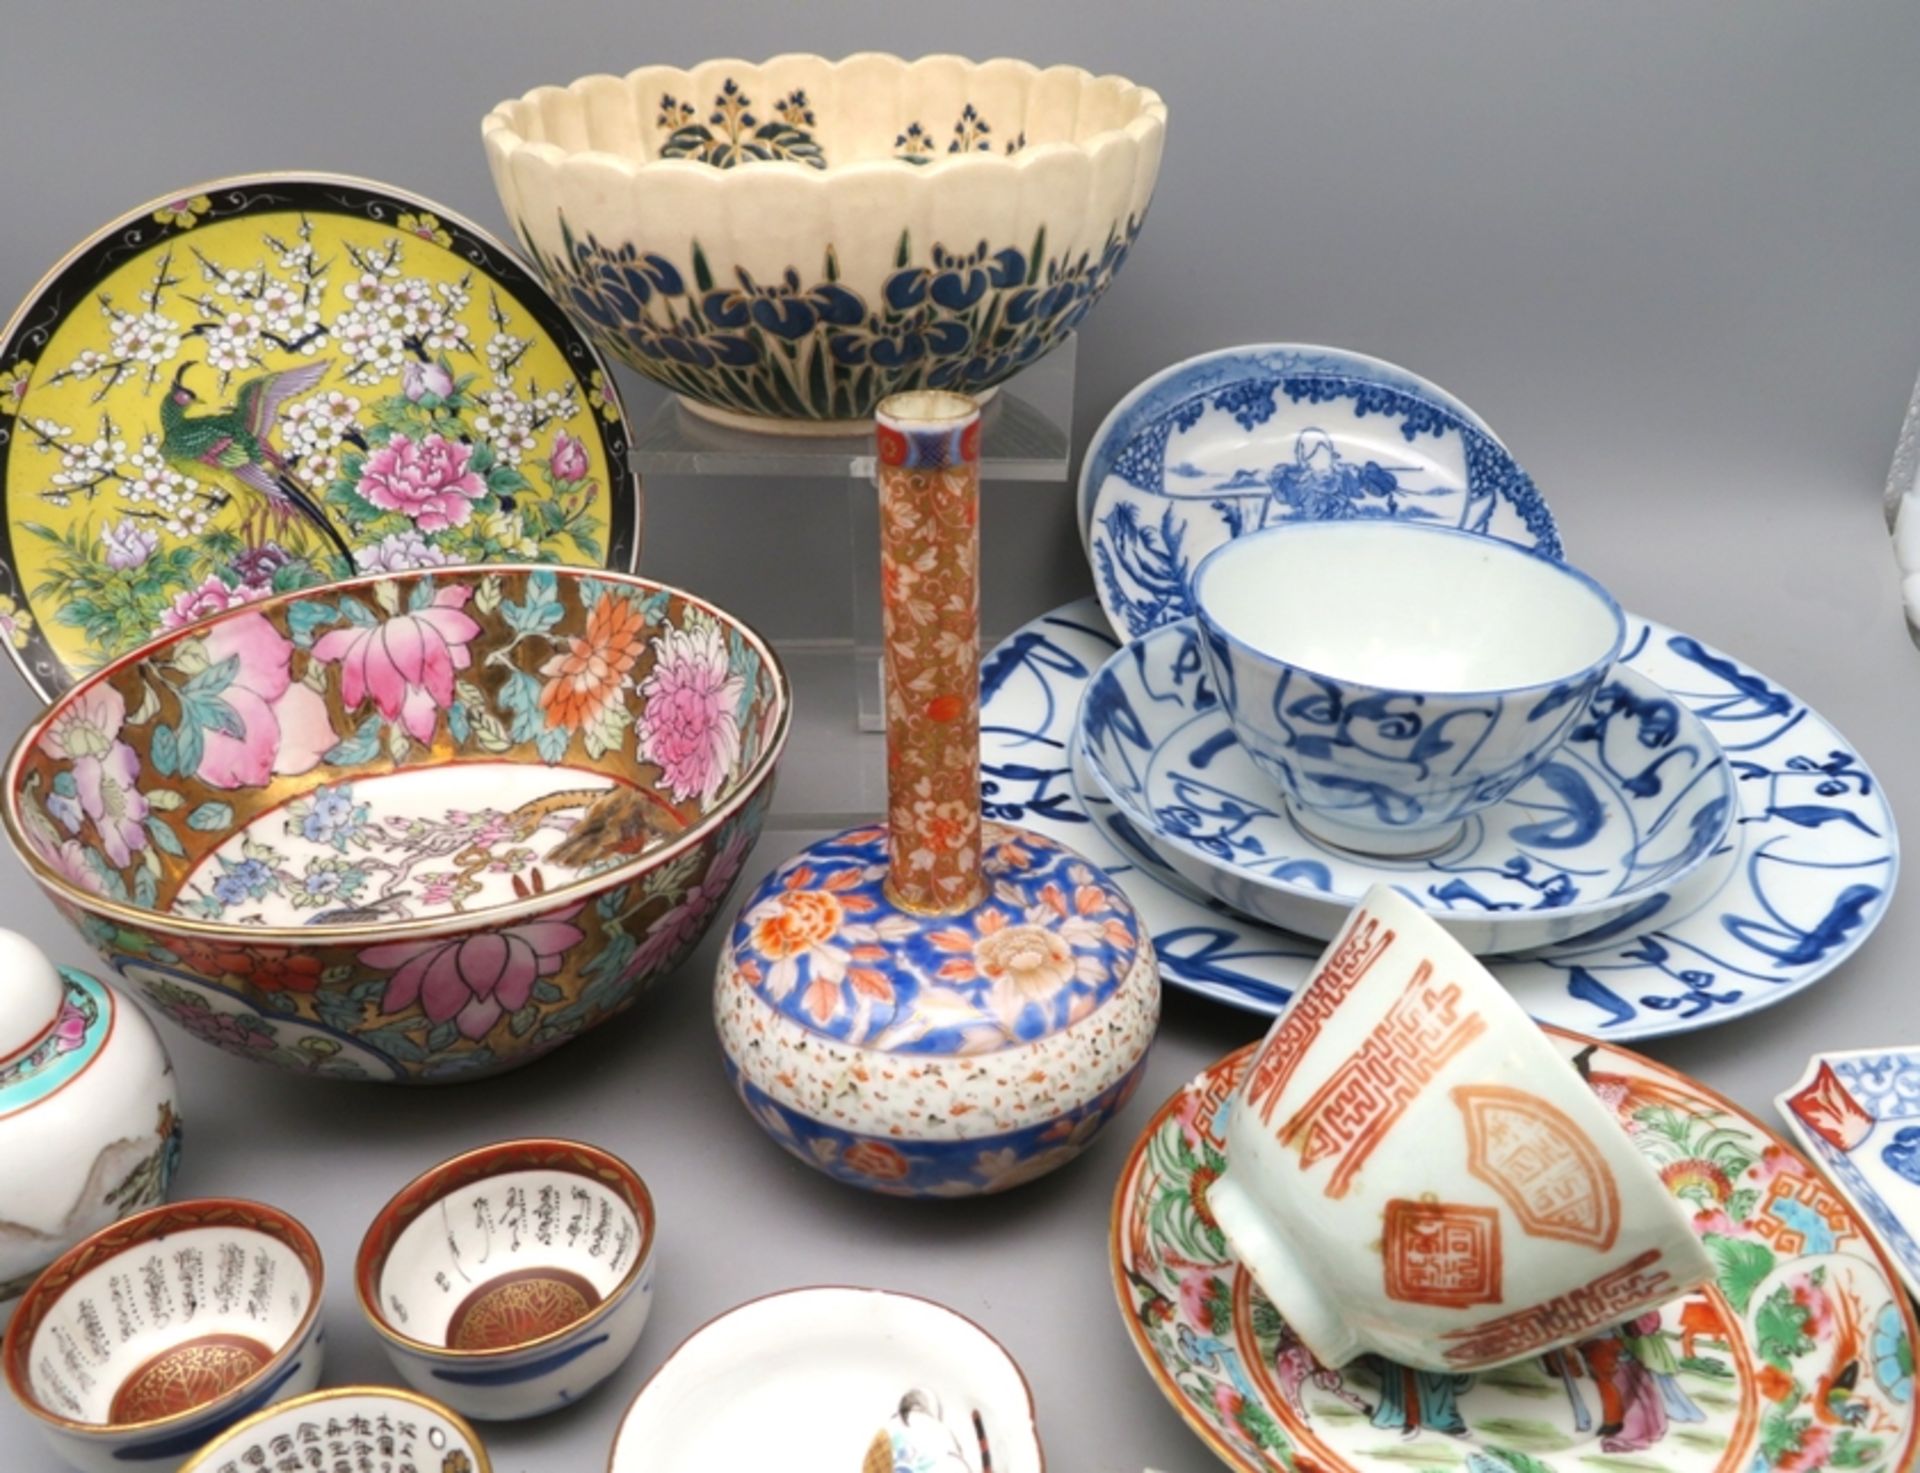 21 teiliges Konvolut diverser Porzellan-Objekte, China und Japan. - Image 2 of 3